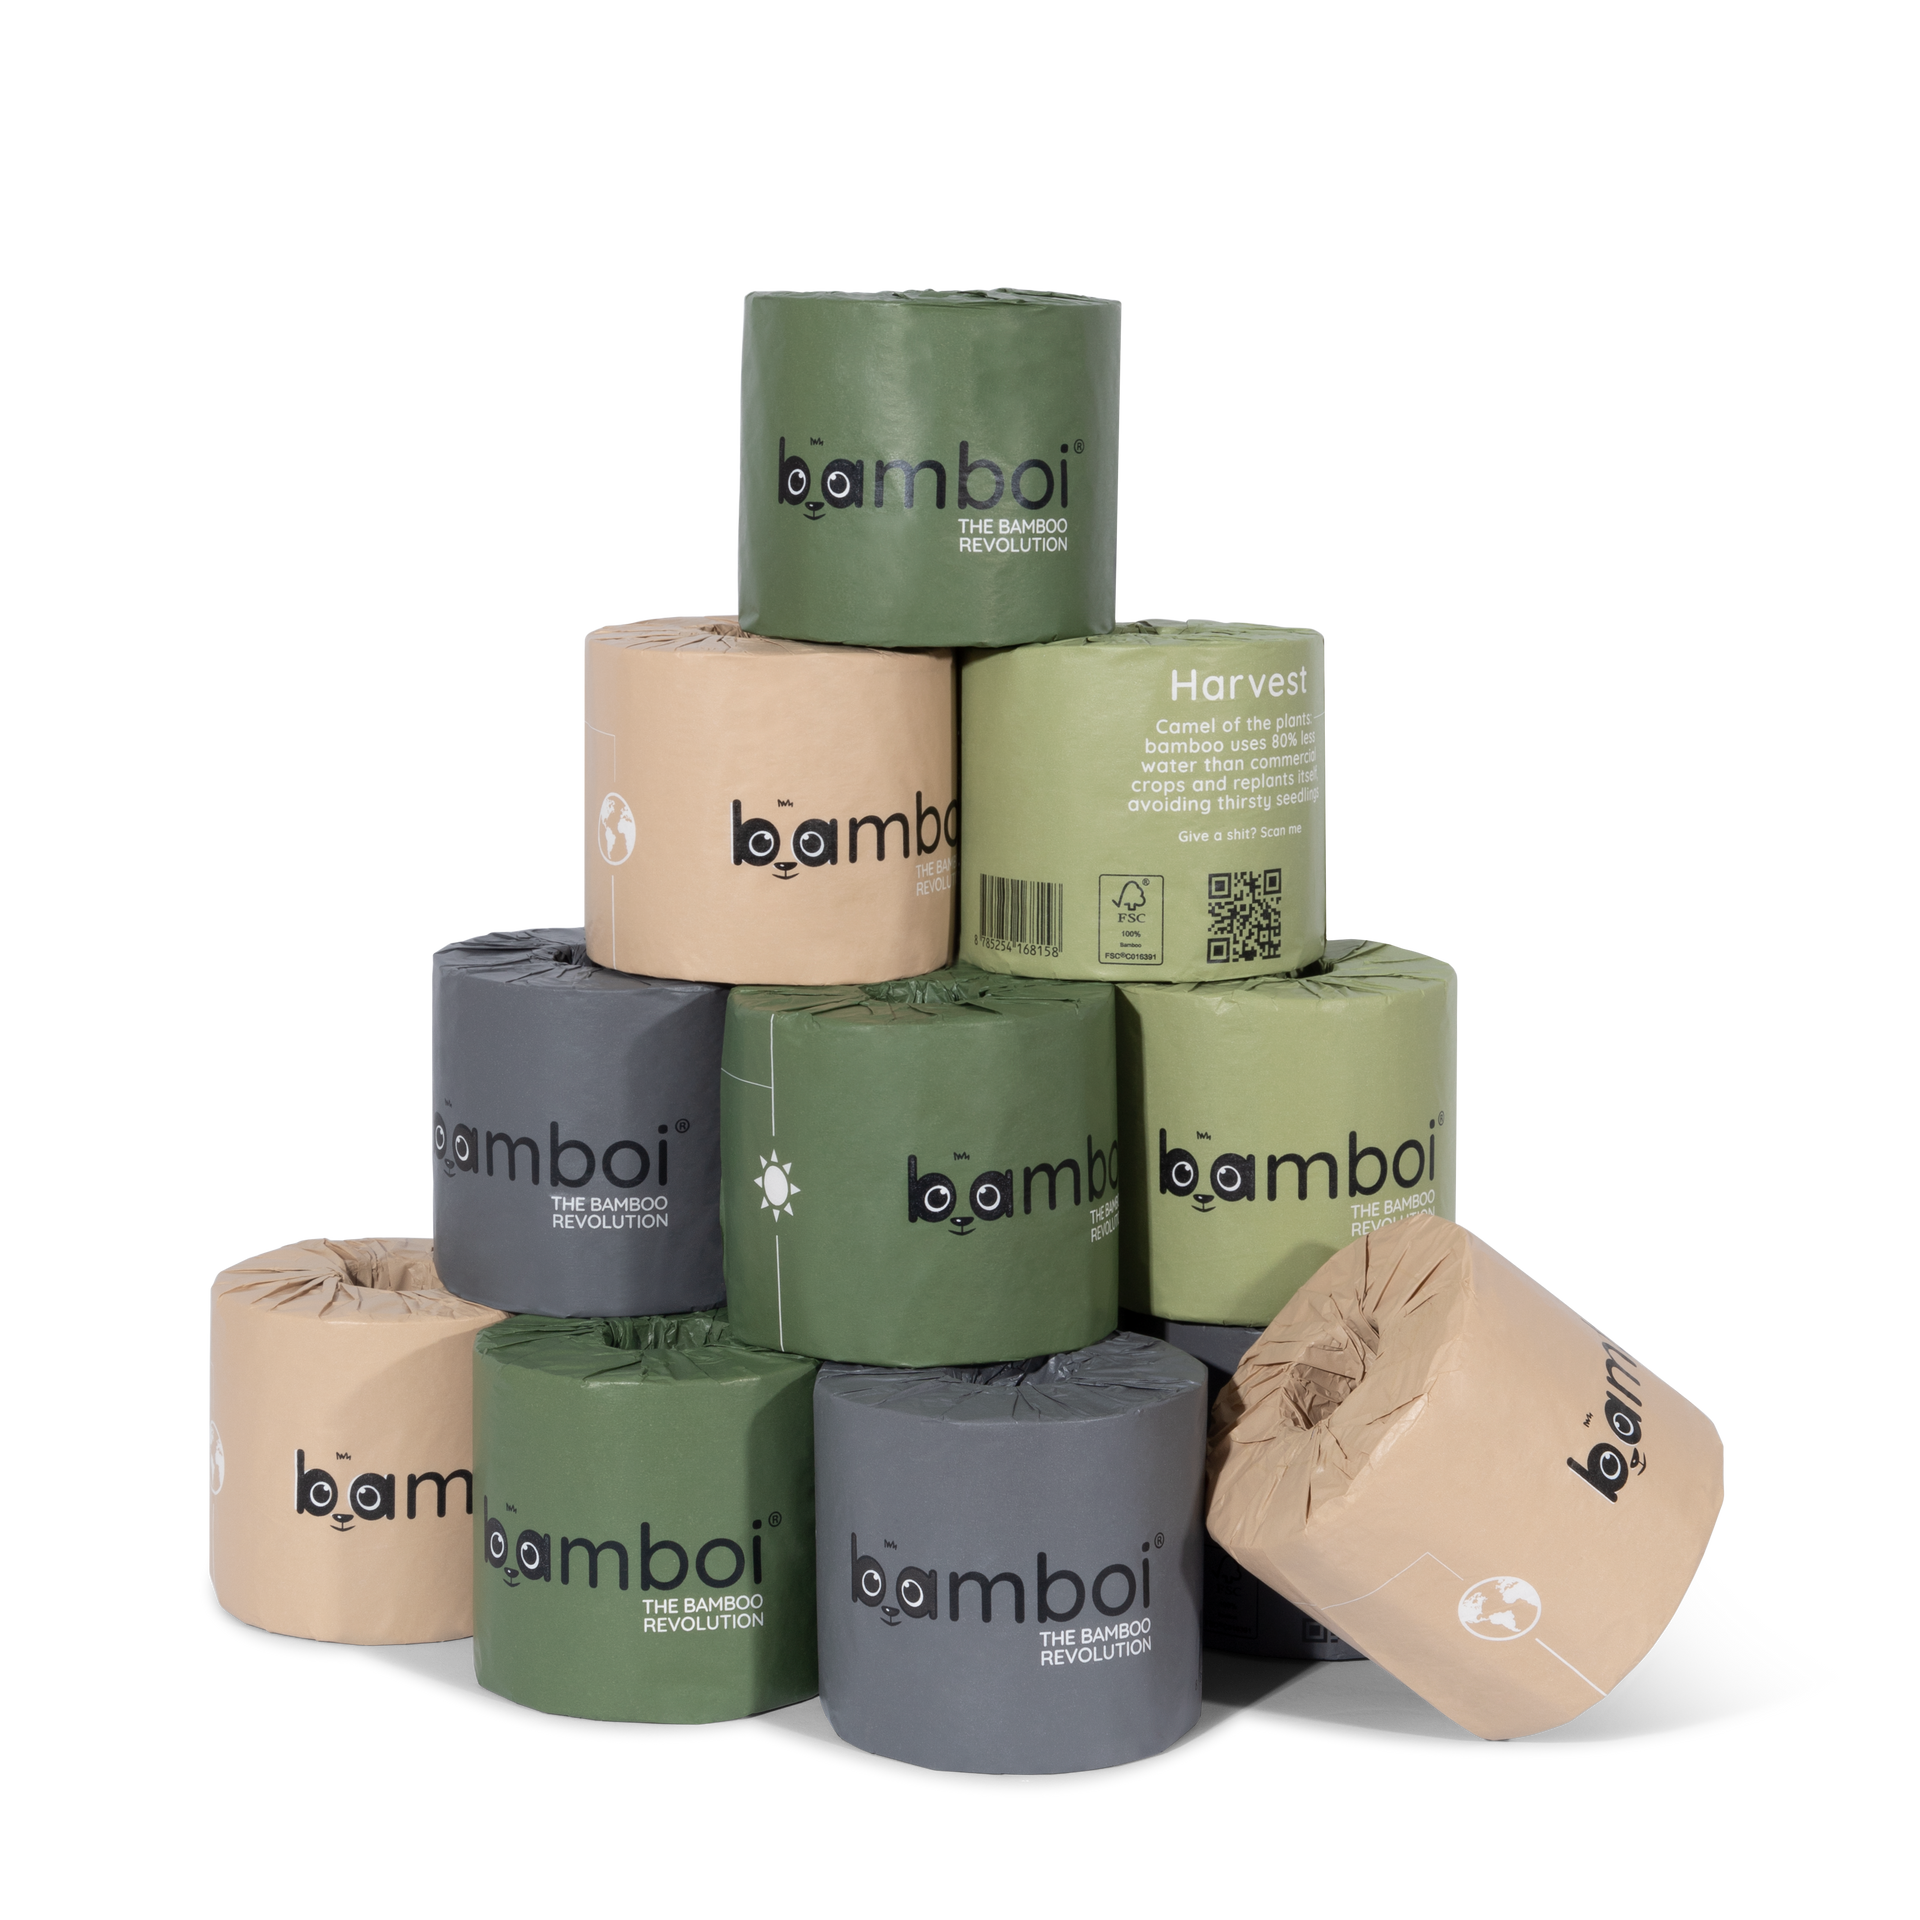 Bamboi® 100% Carta igienica di bambù 48 rotoli